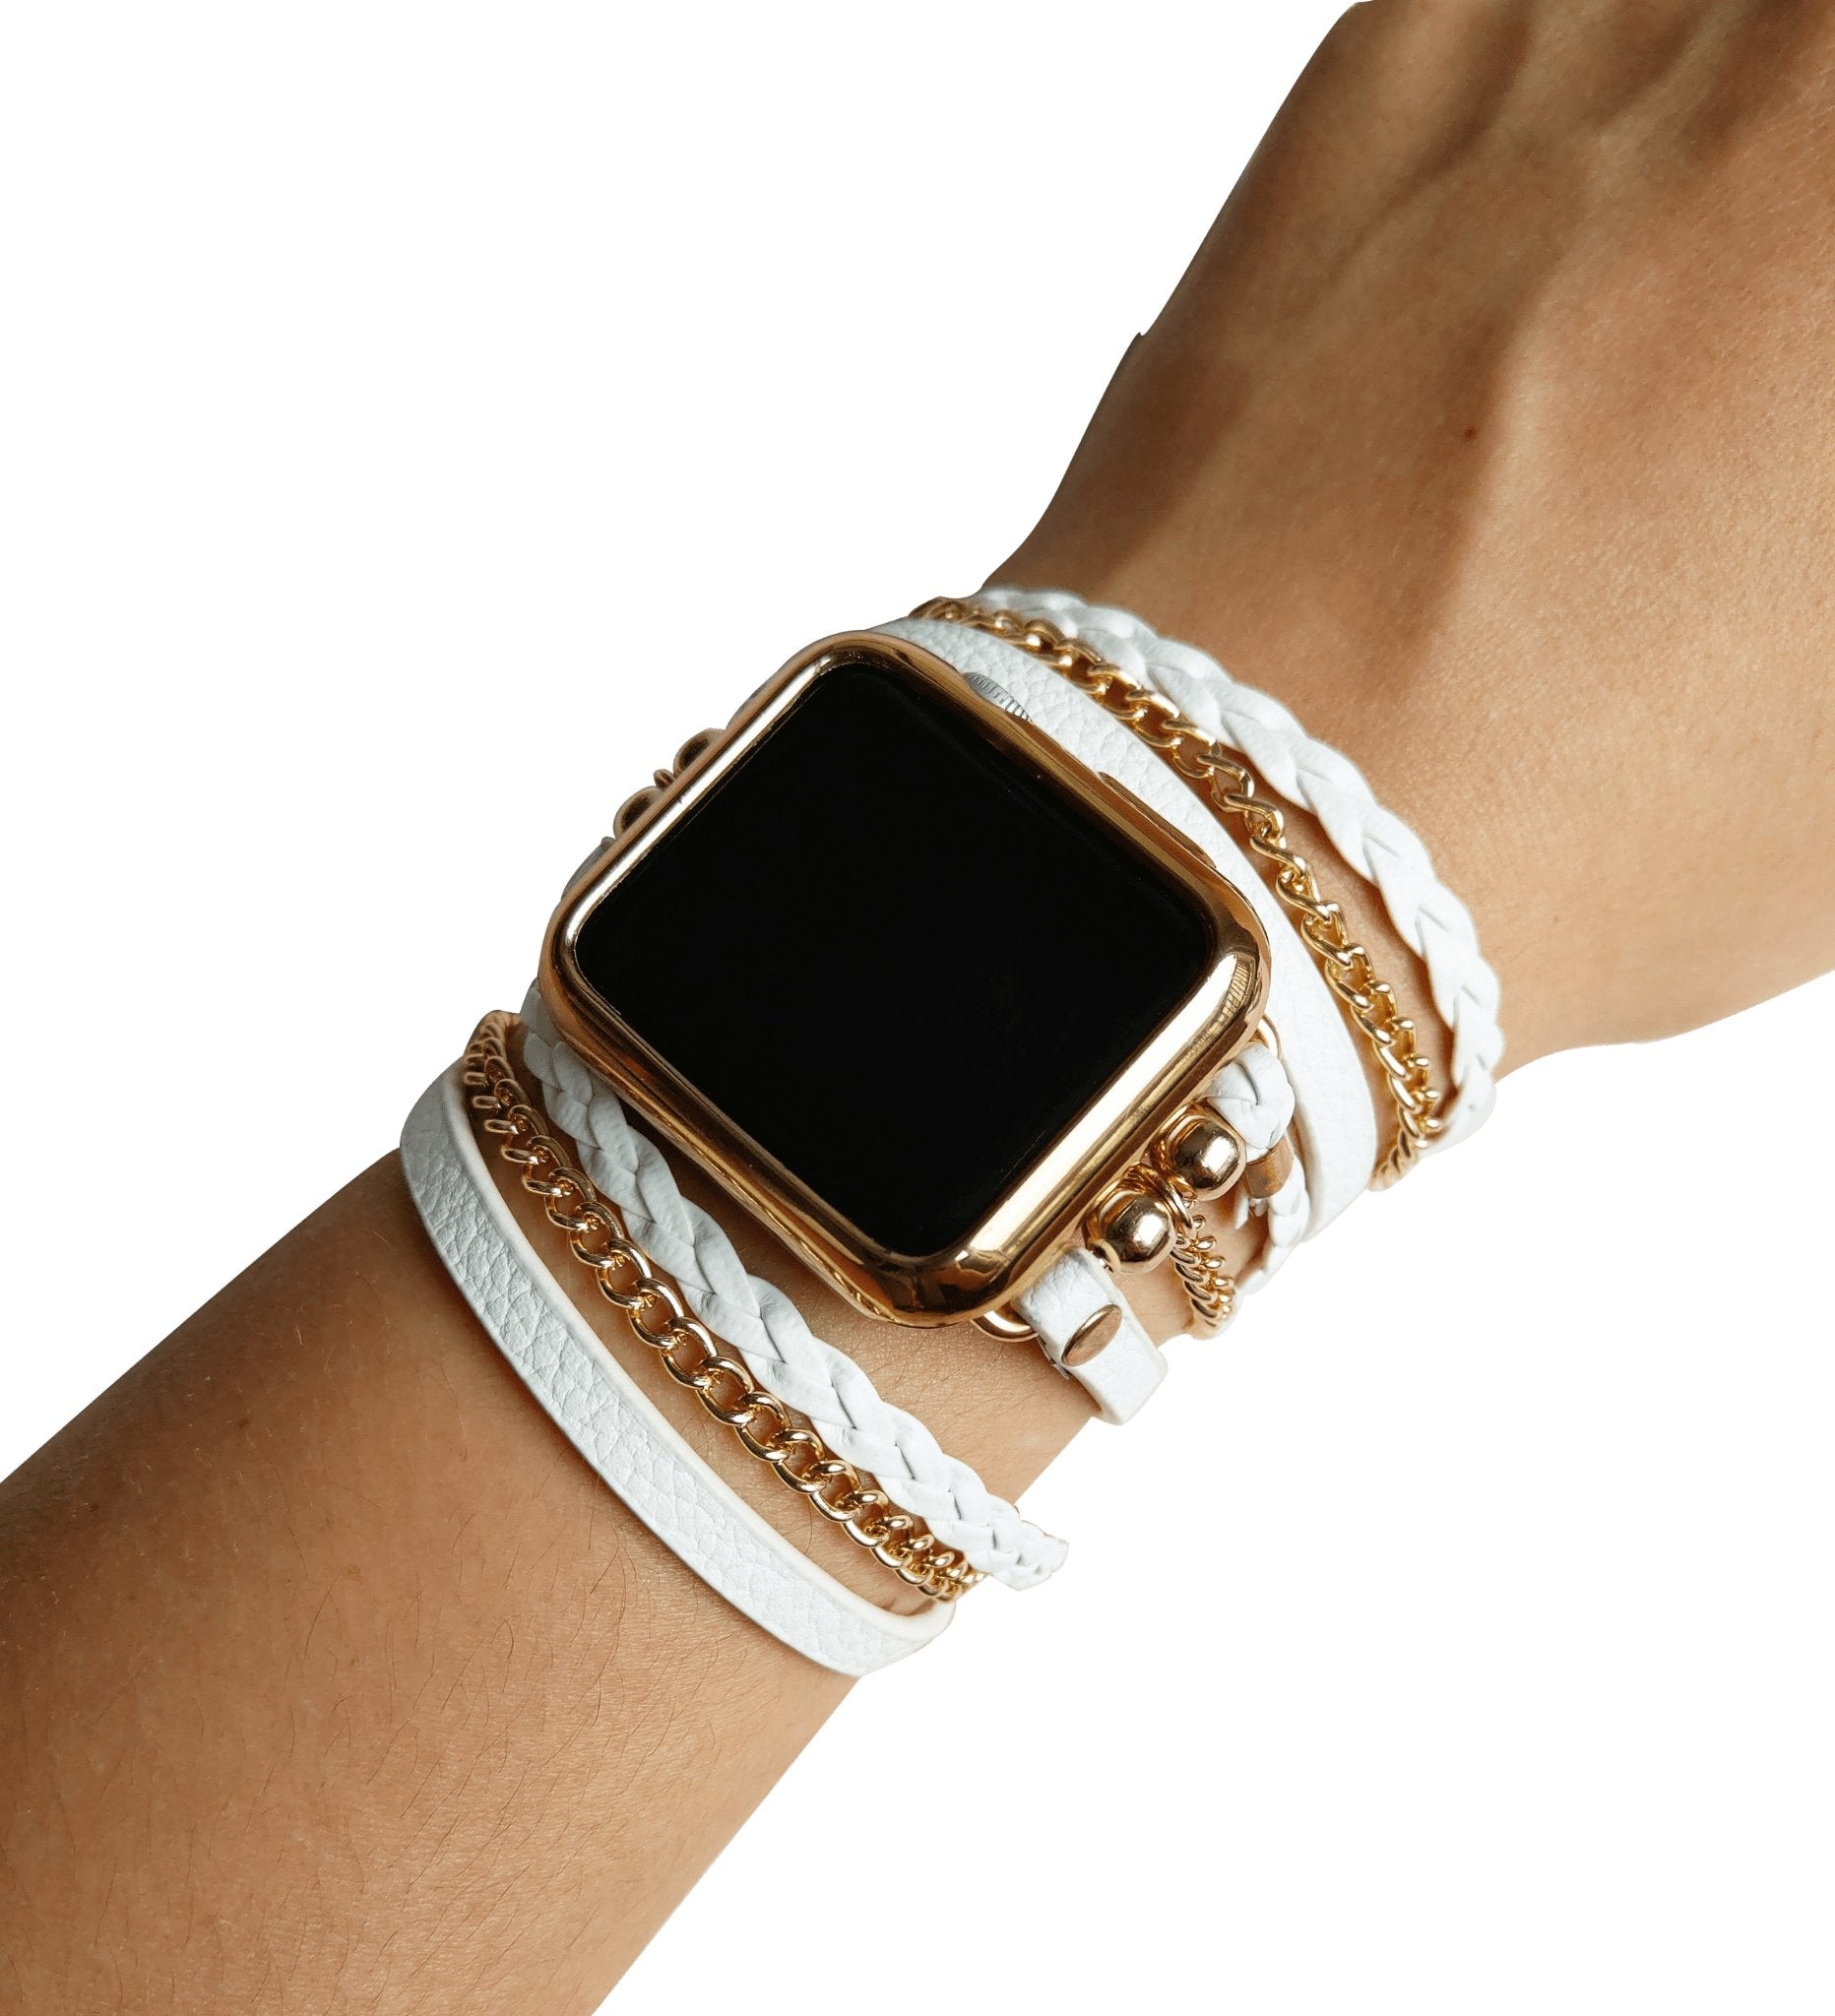 Boho Chic Apple Watch Band Vegan Leather, Iwatch Wristband